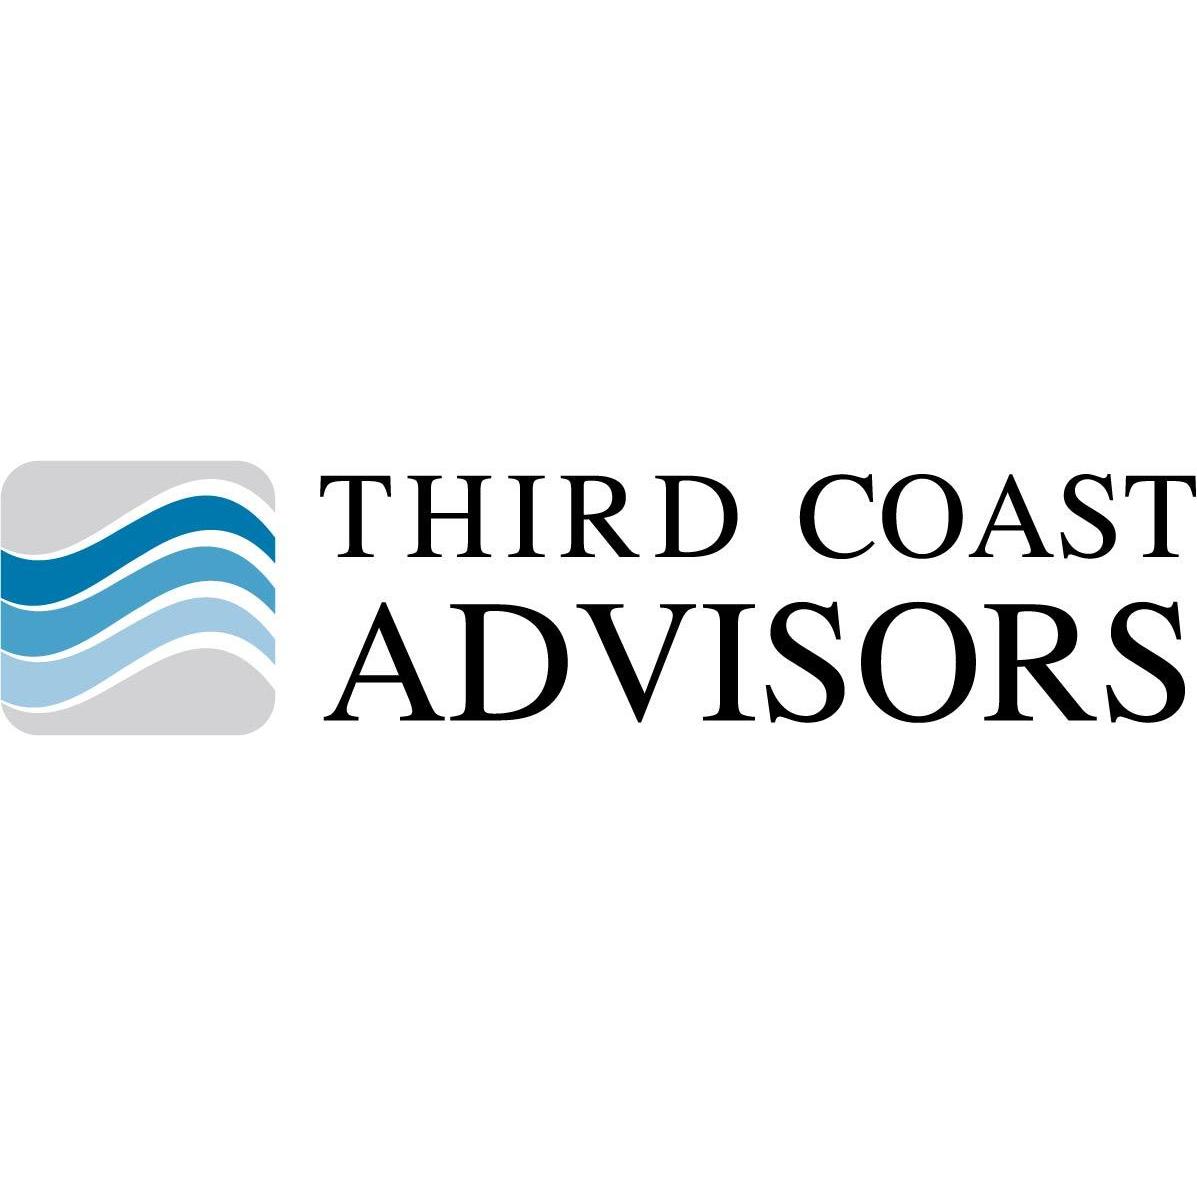 Third Coast Advisors